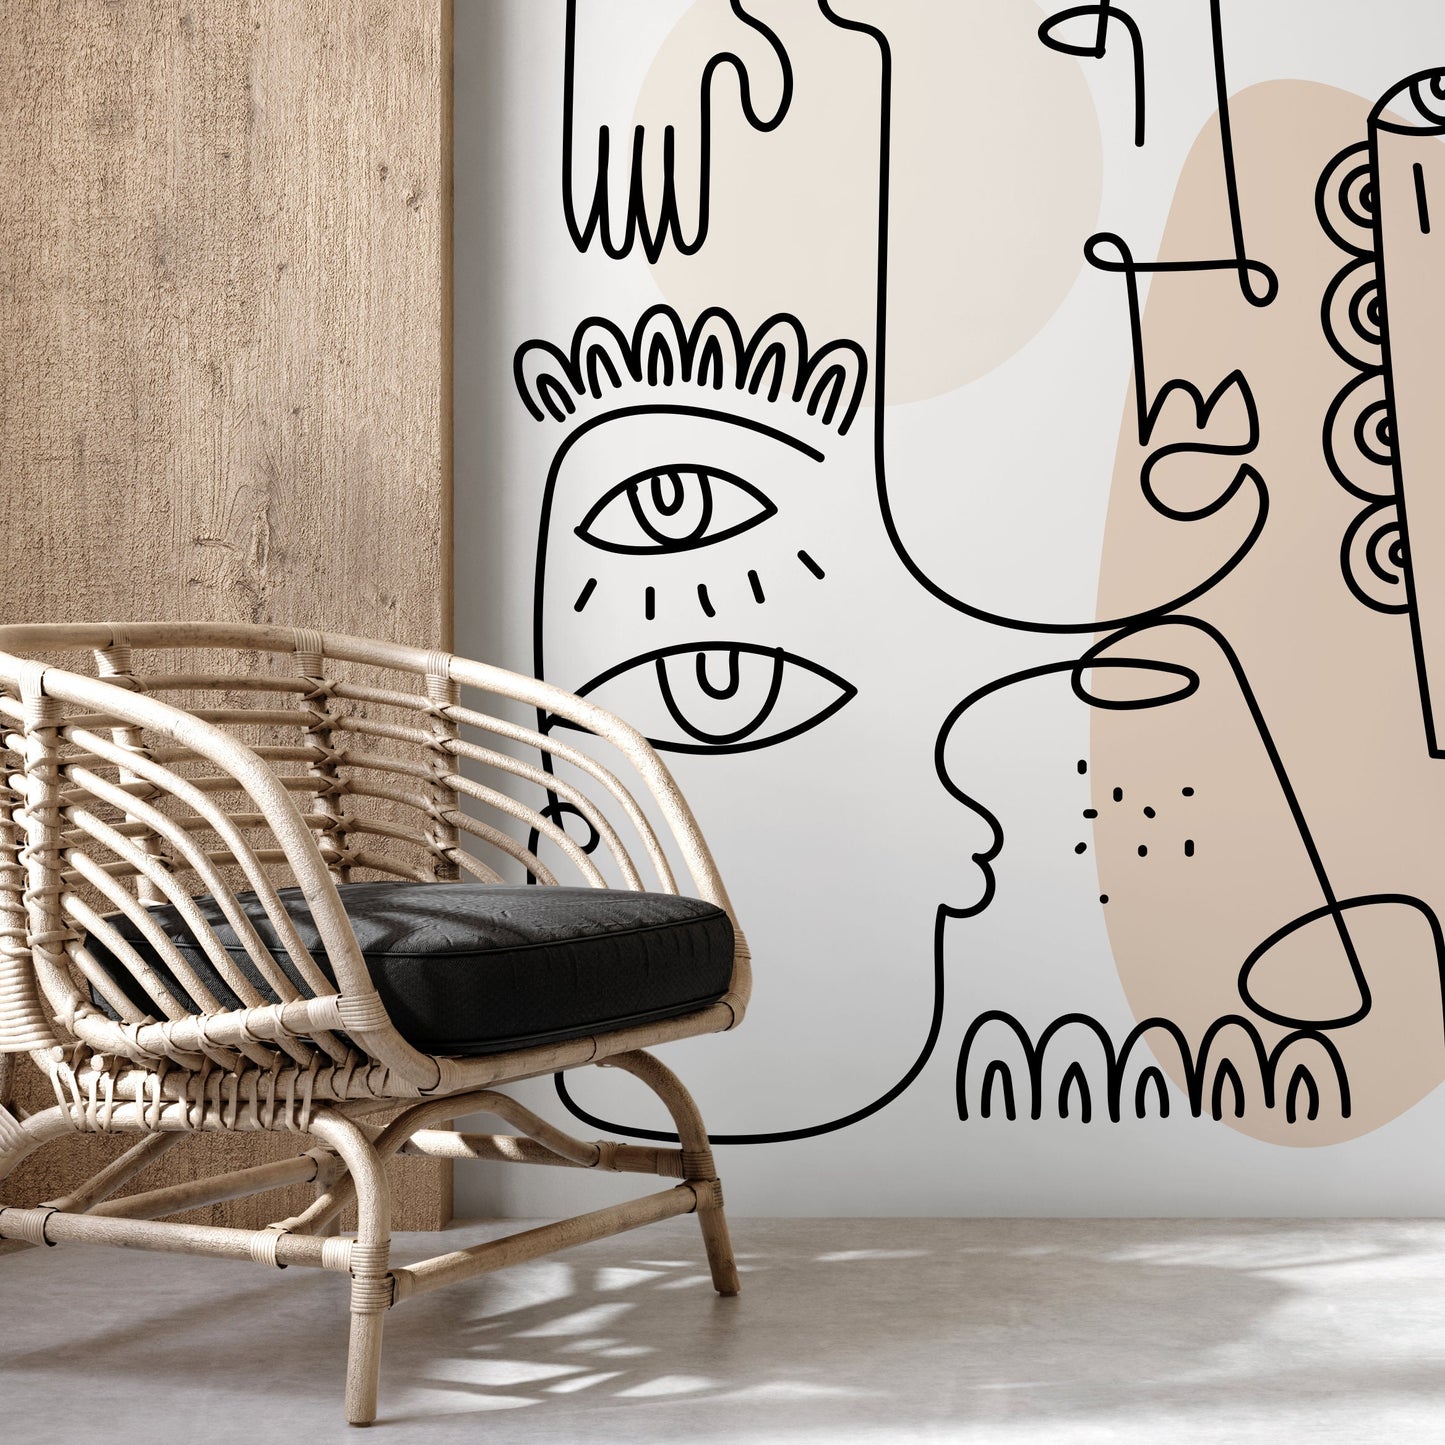 Neutral Abstract Mural Line Art Wallpaper Peel and Stick Wallpaper Home Decor - D602